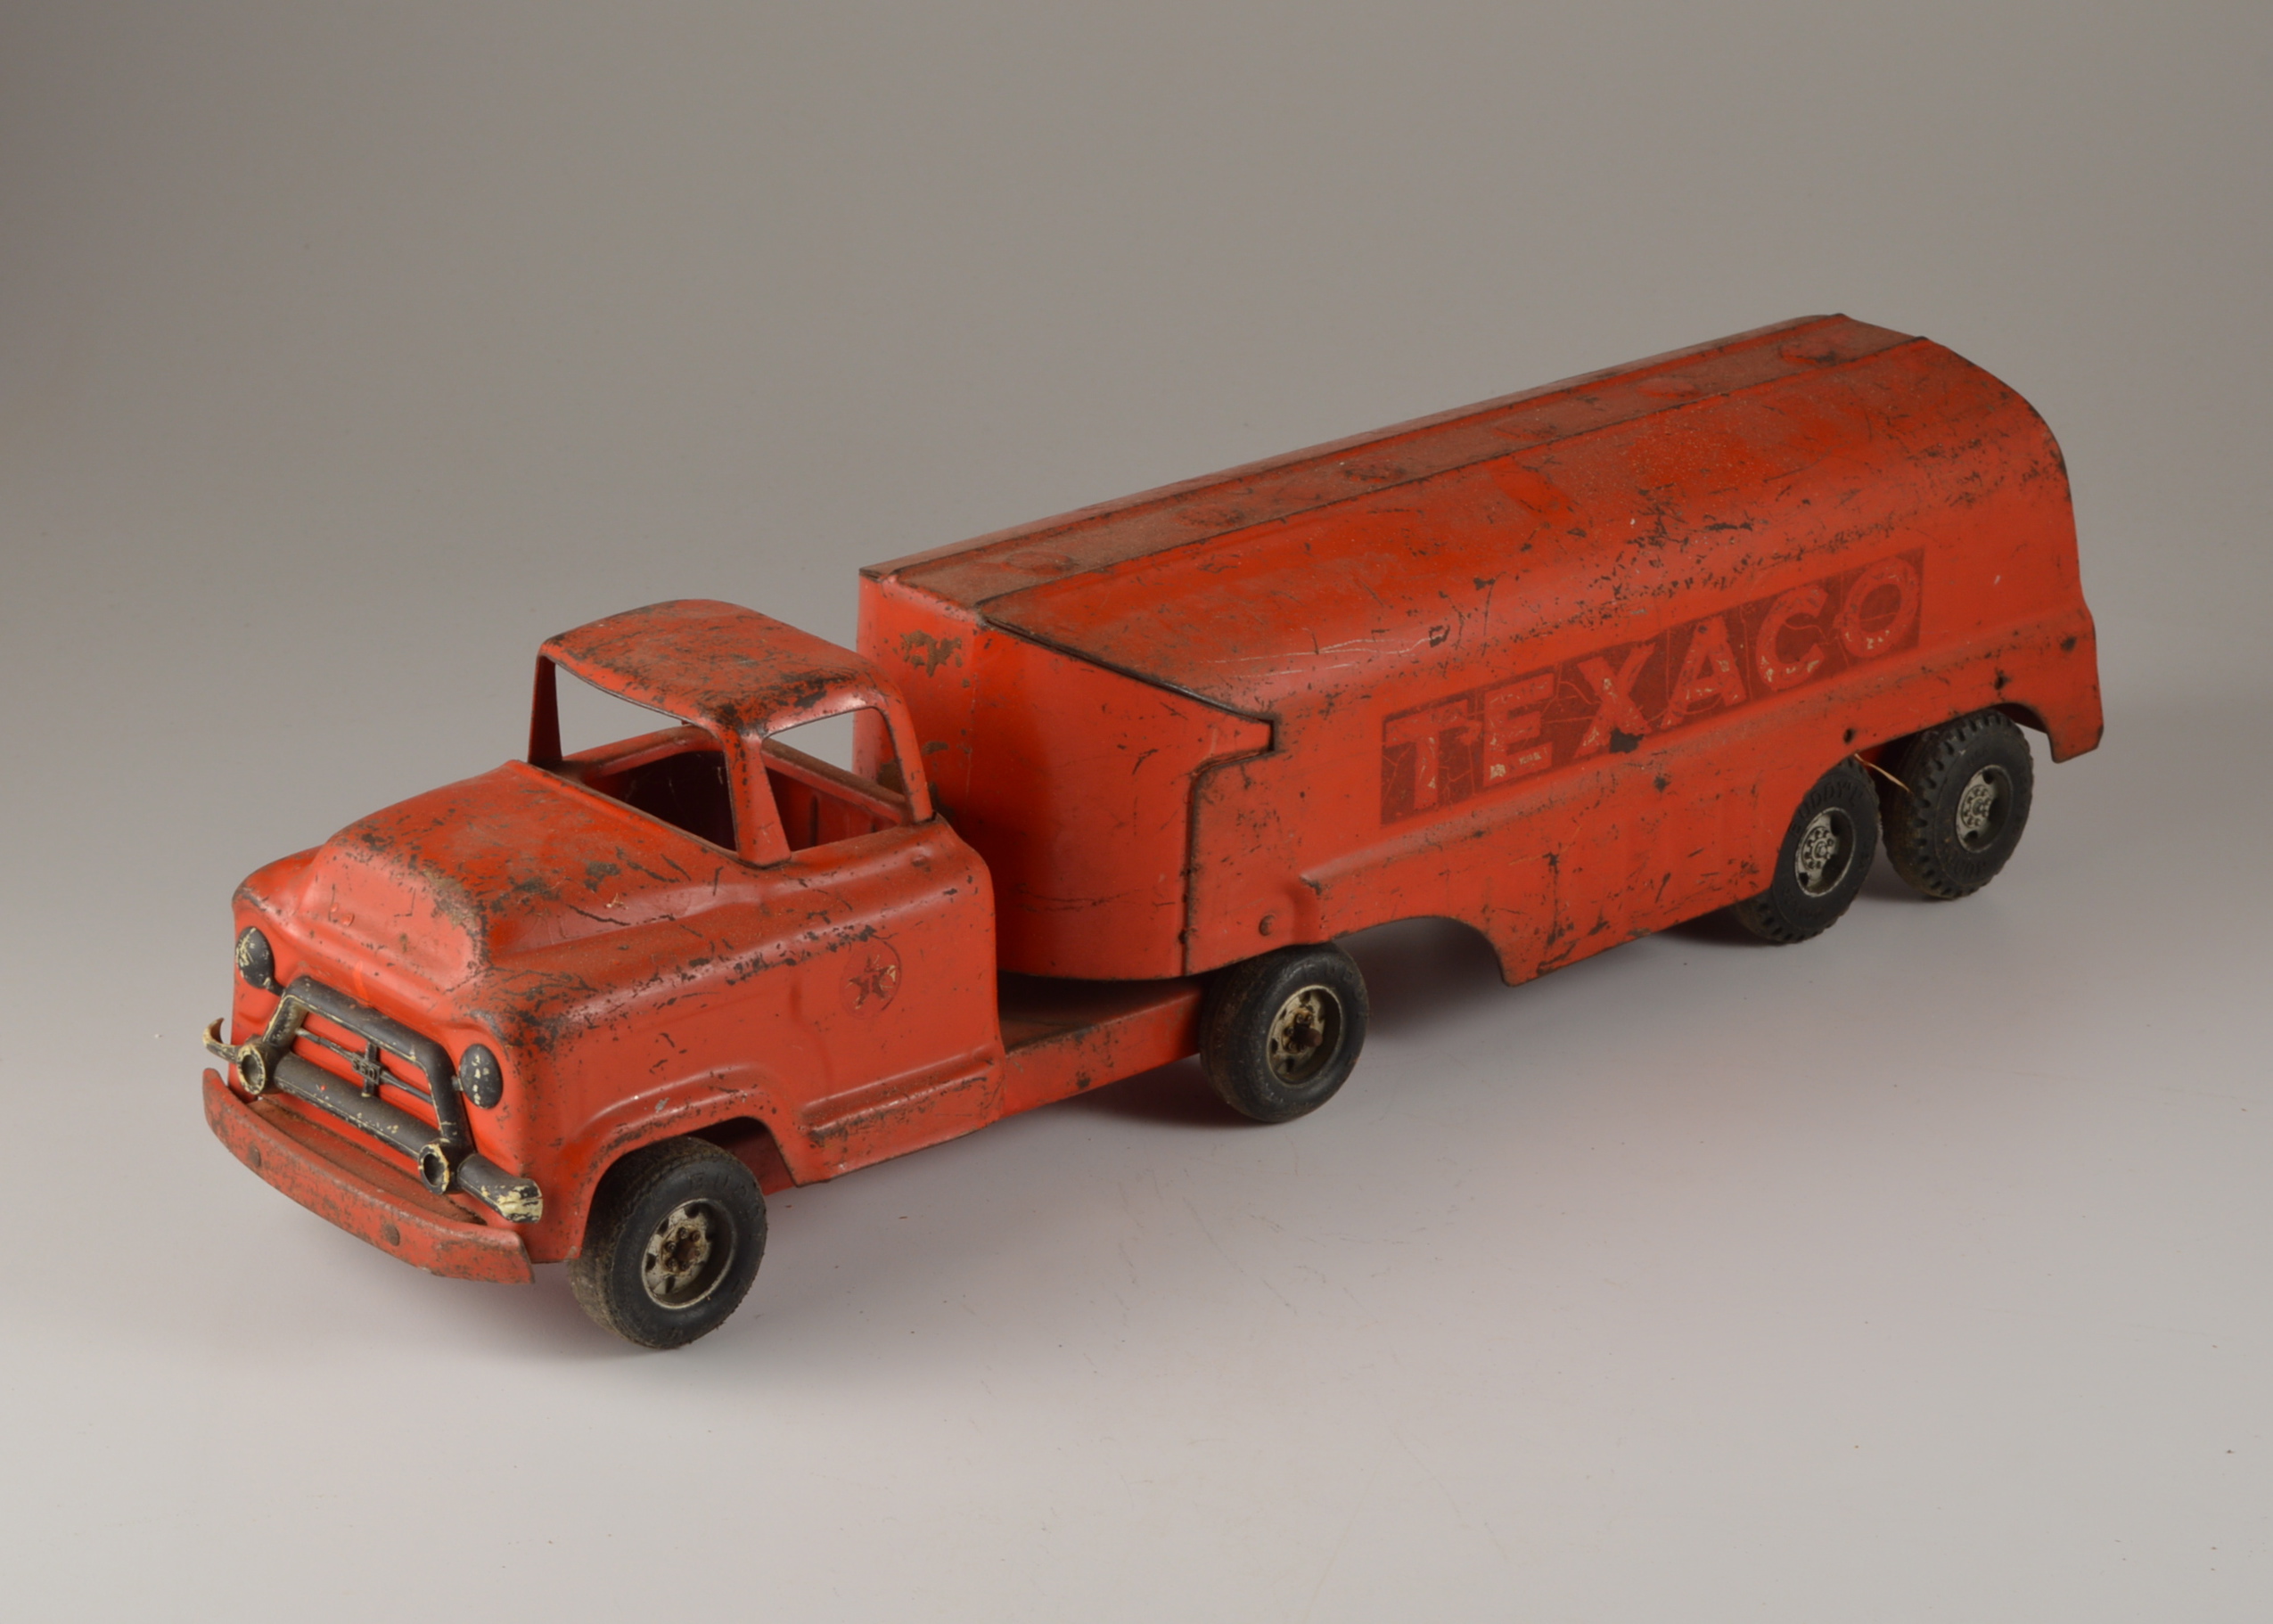 metal texaco toy truck